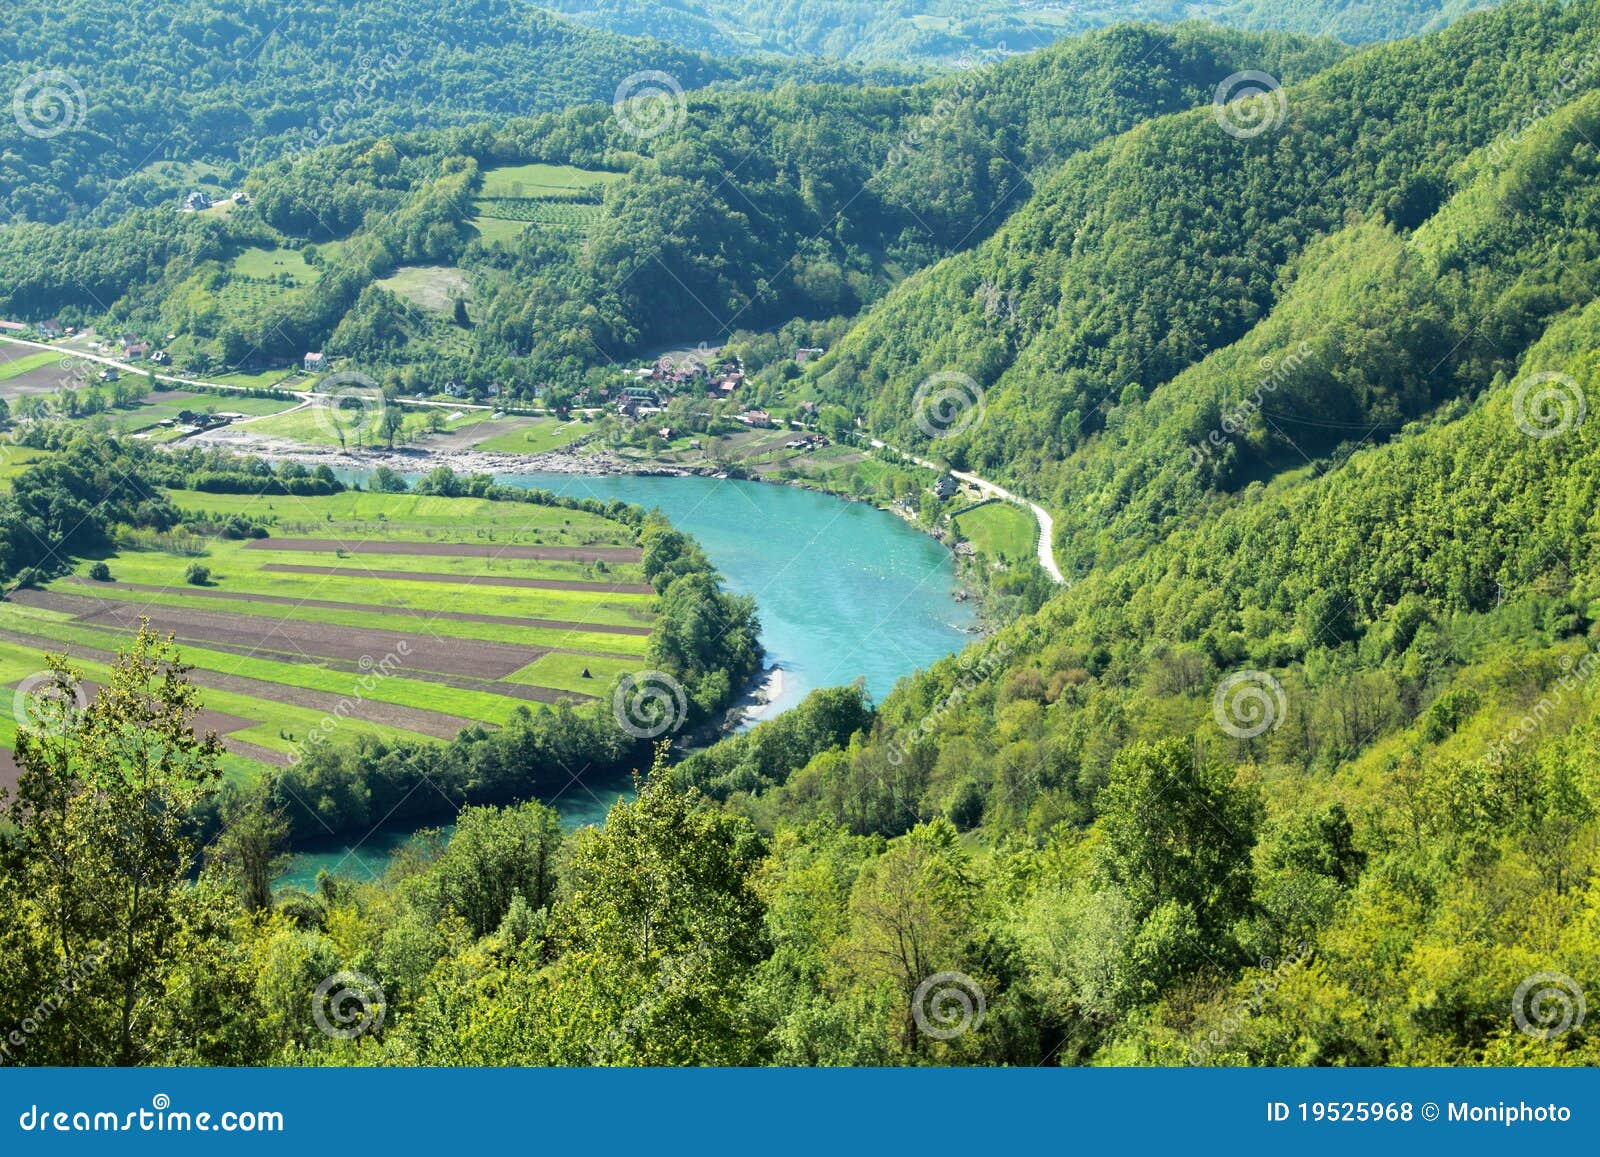 river drina in the mountains of tara,serbia